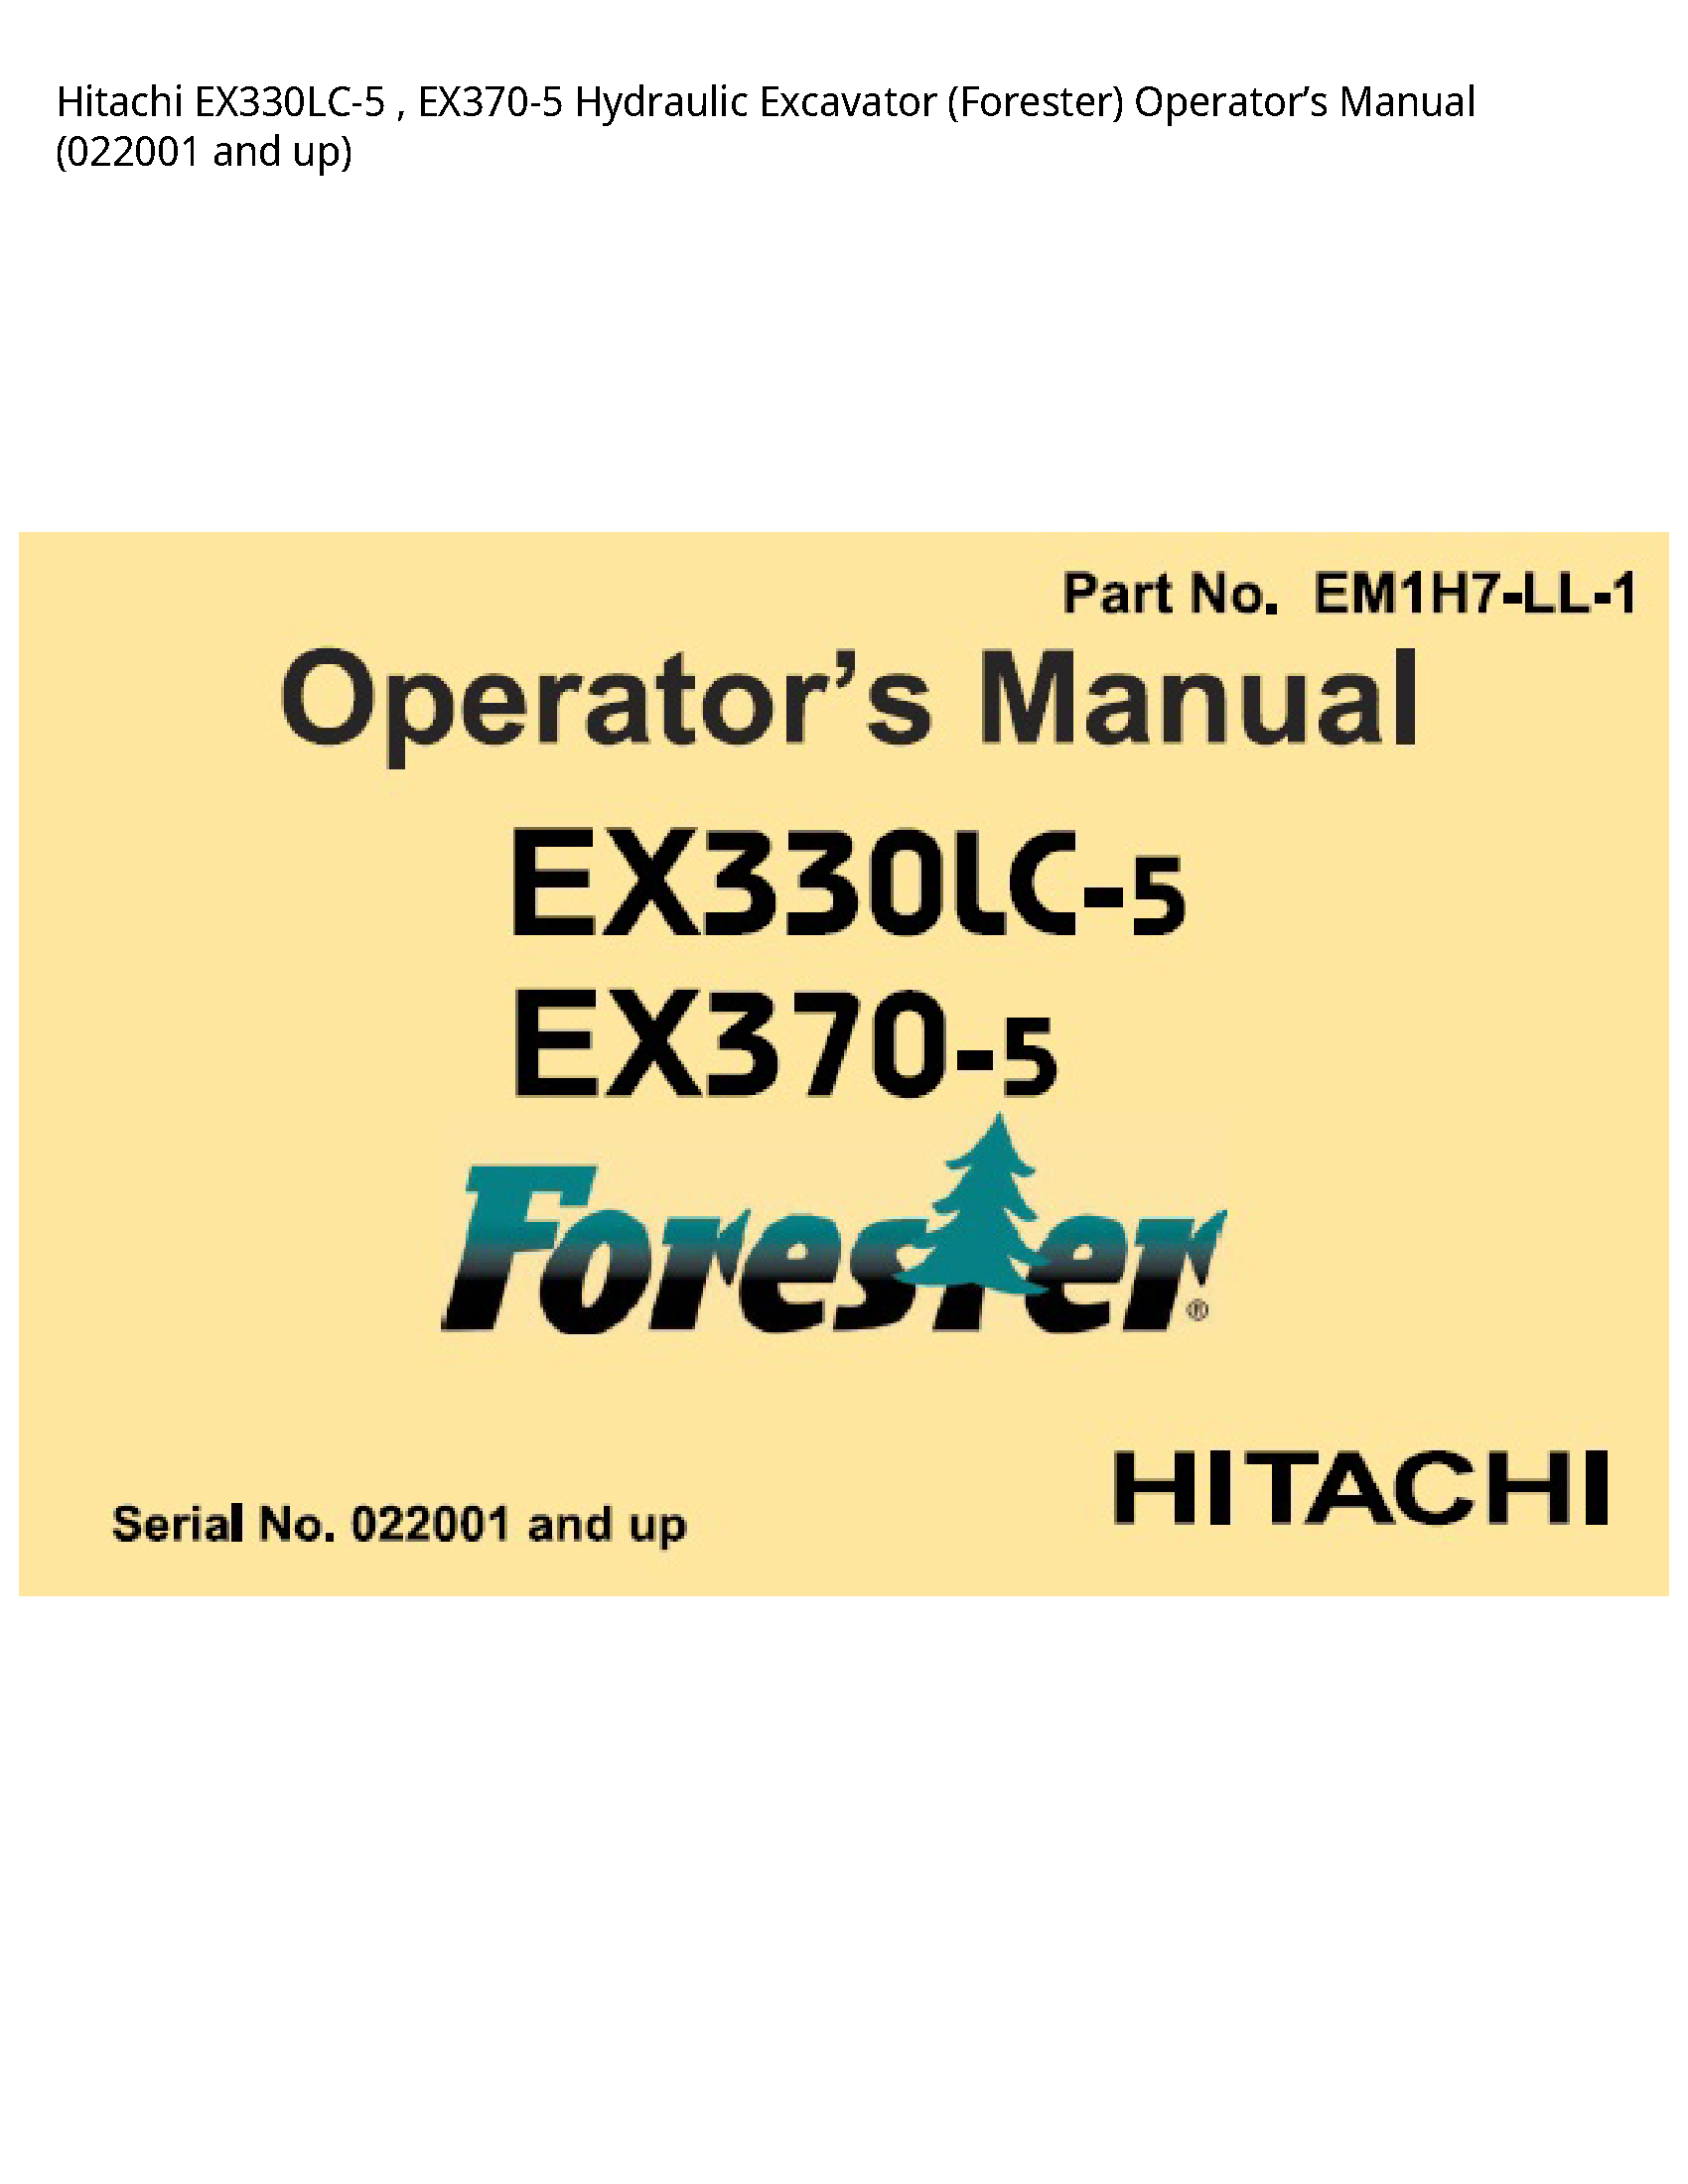 Hitachi EX330LC-5 Hydraulic Excavator (Forester) Operator’s manual